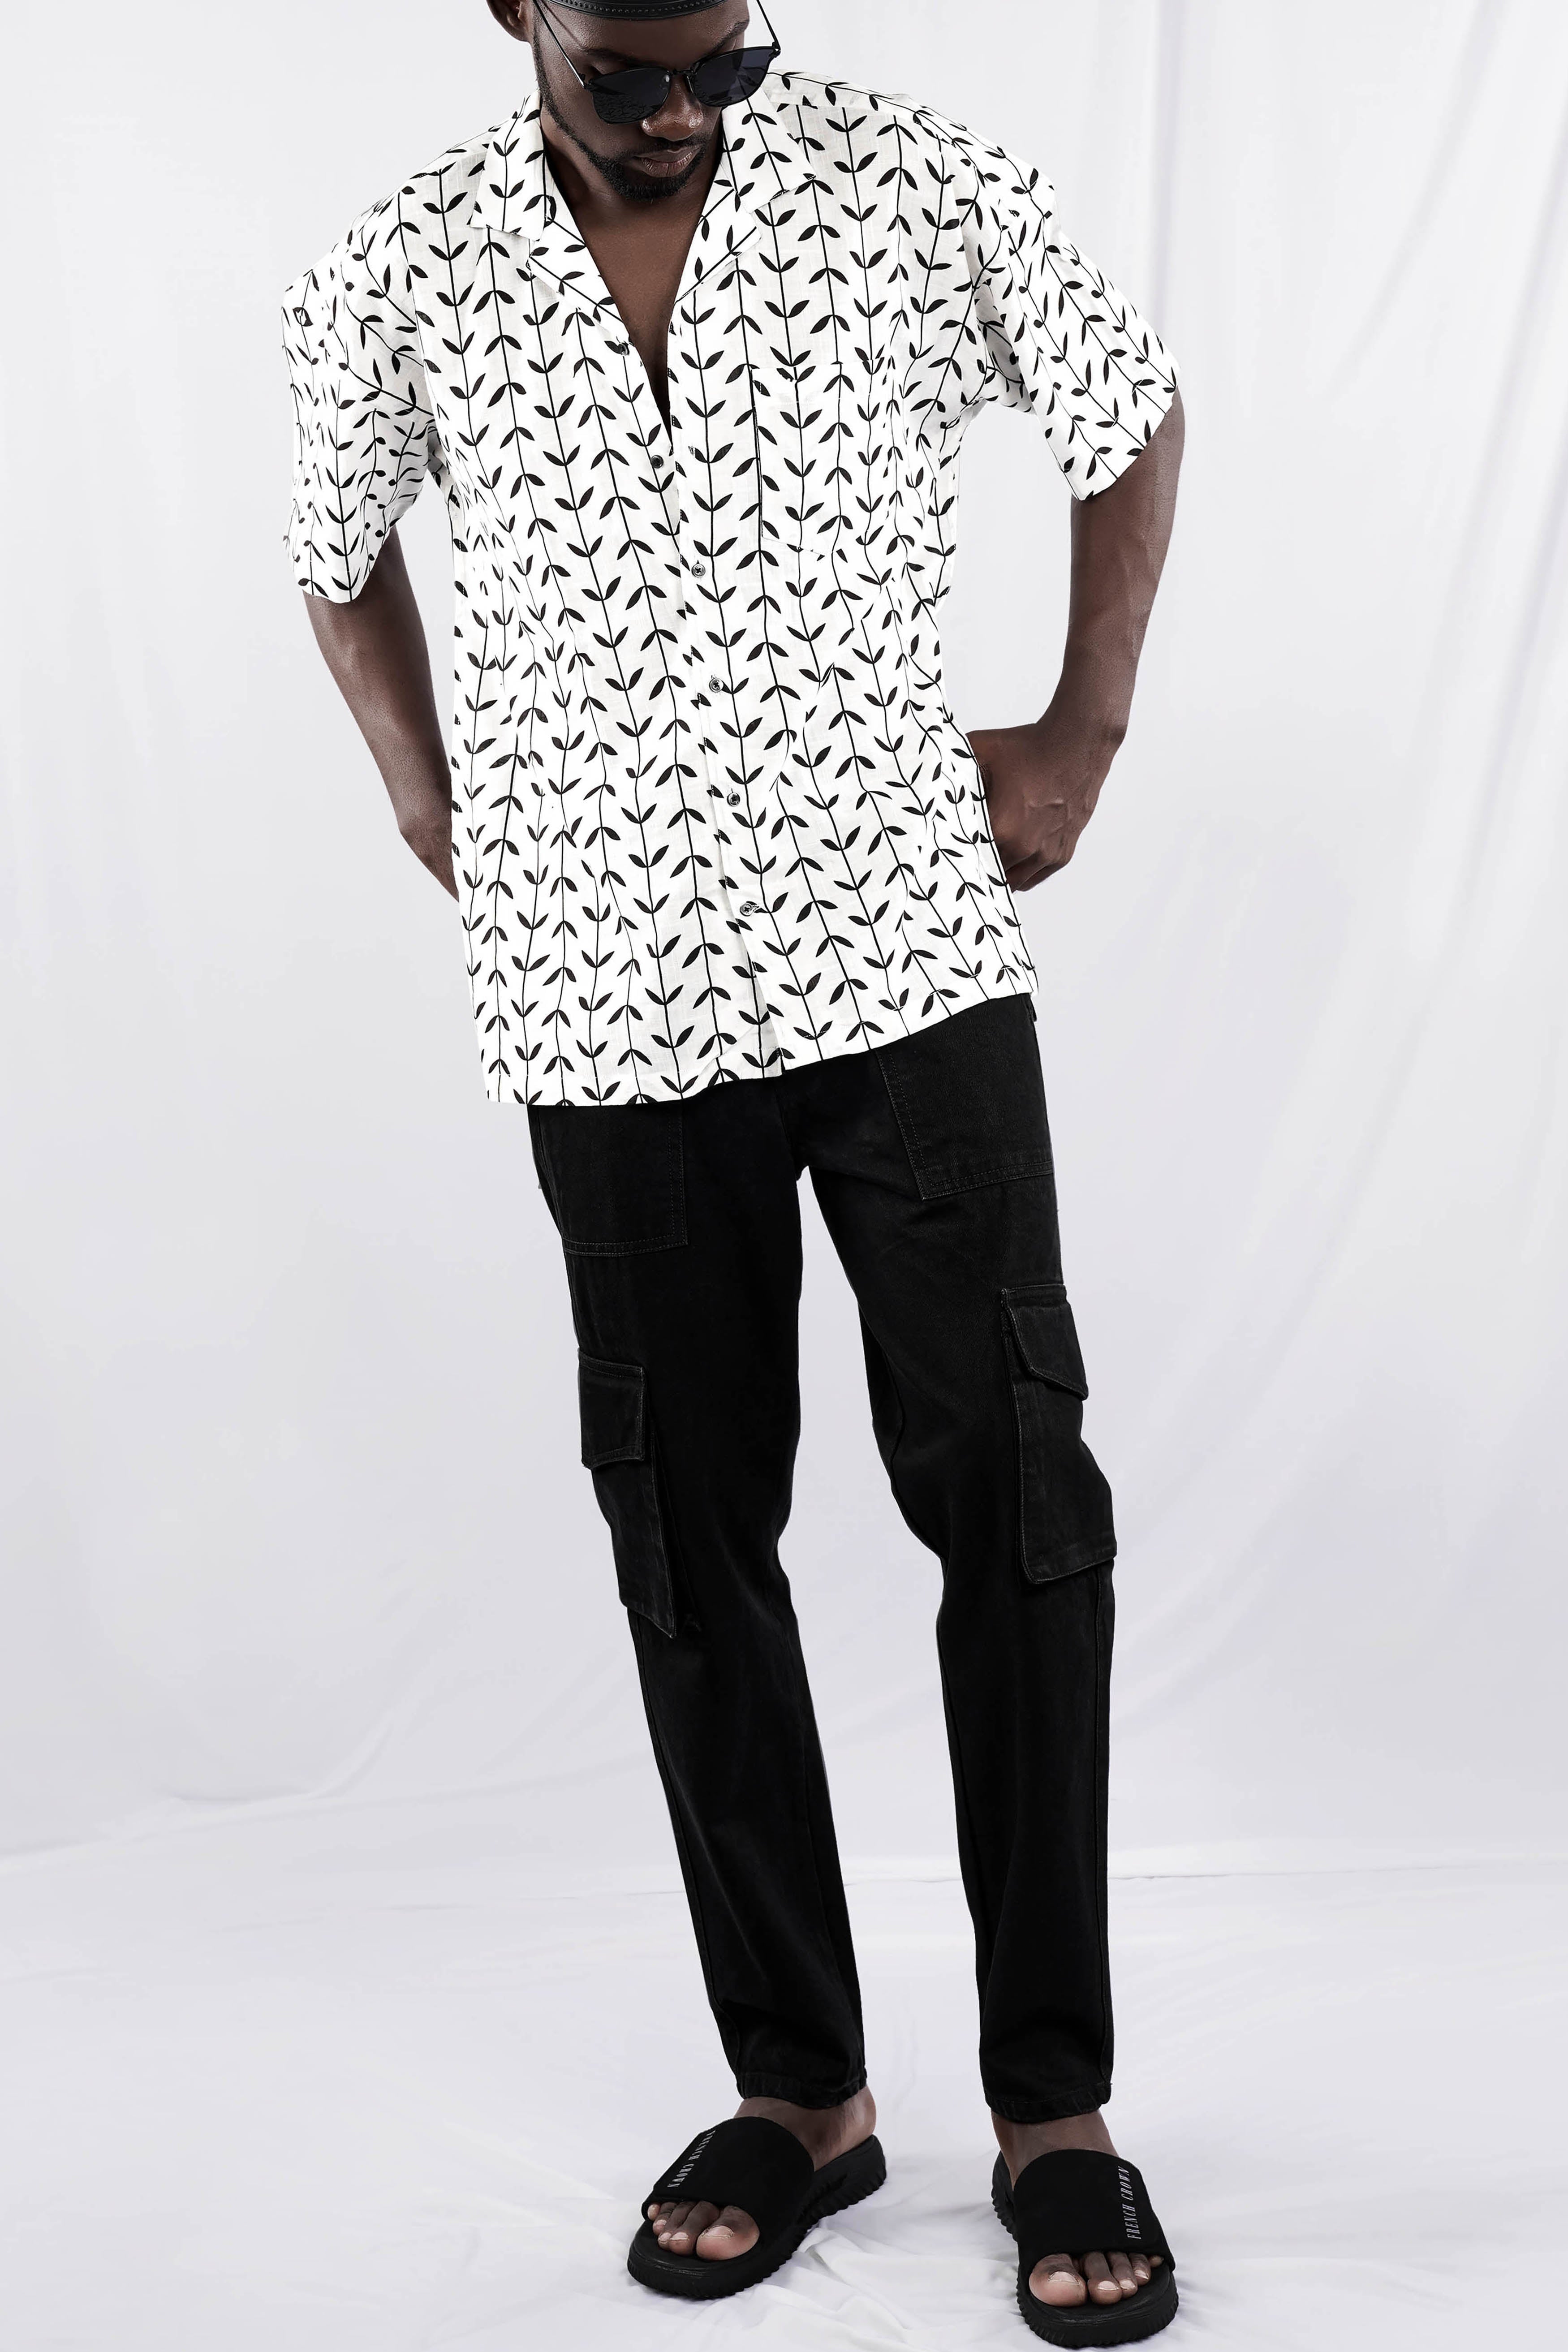 Bright White and Black Printed Lightweight Oversized Premium Cotton Shirt